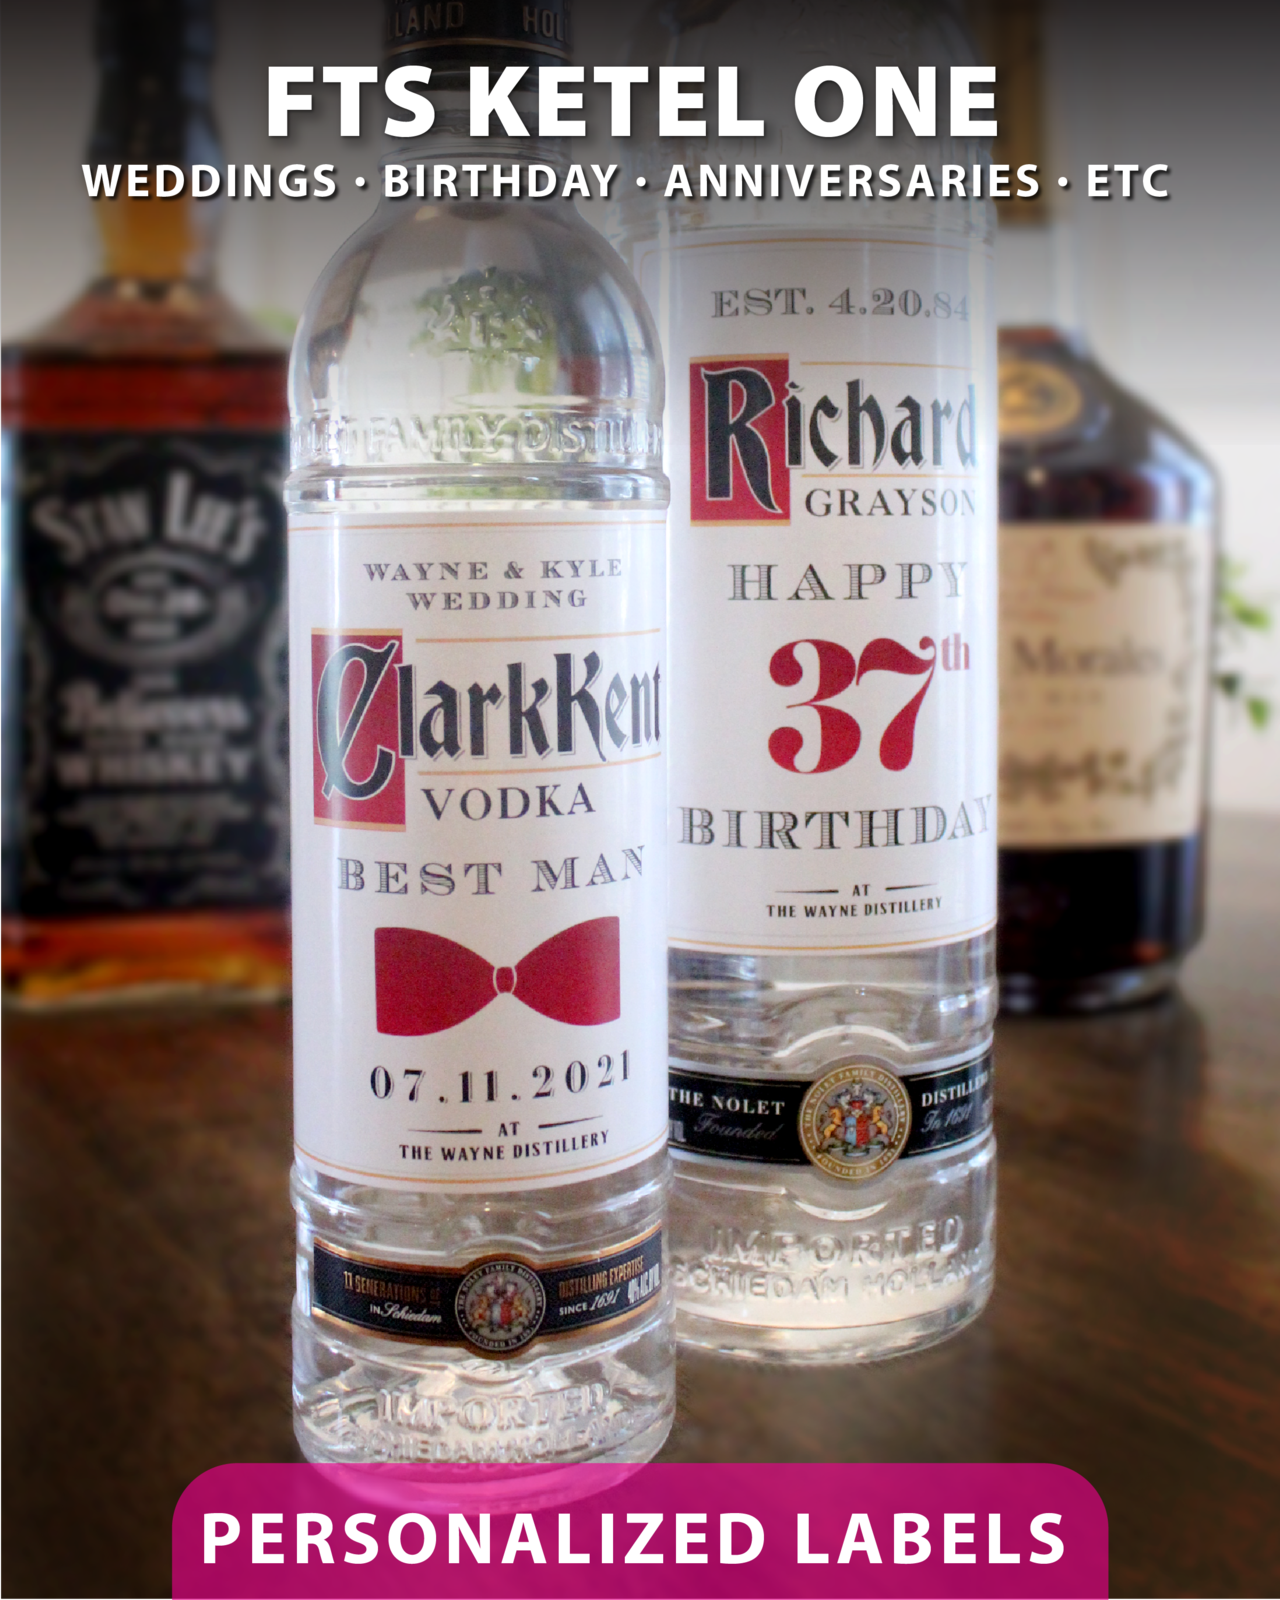 Personalized Label to fit Ketel One Vodka Bottle - Weddings, Birthdays, Etc